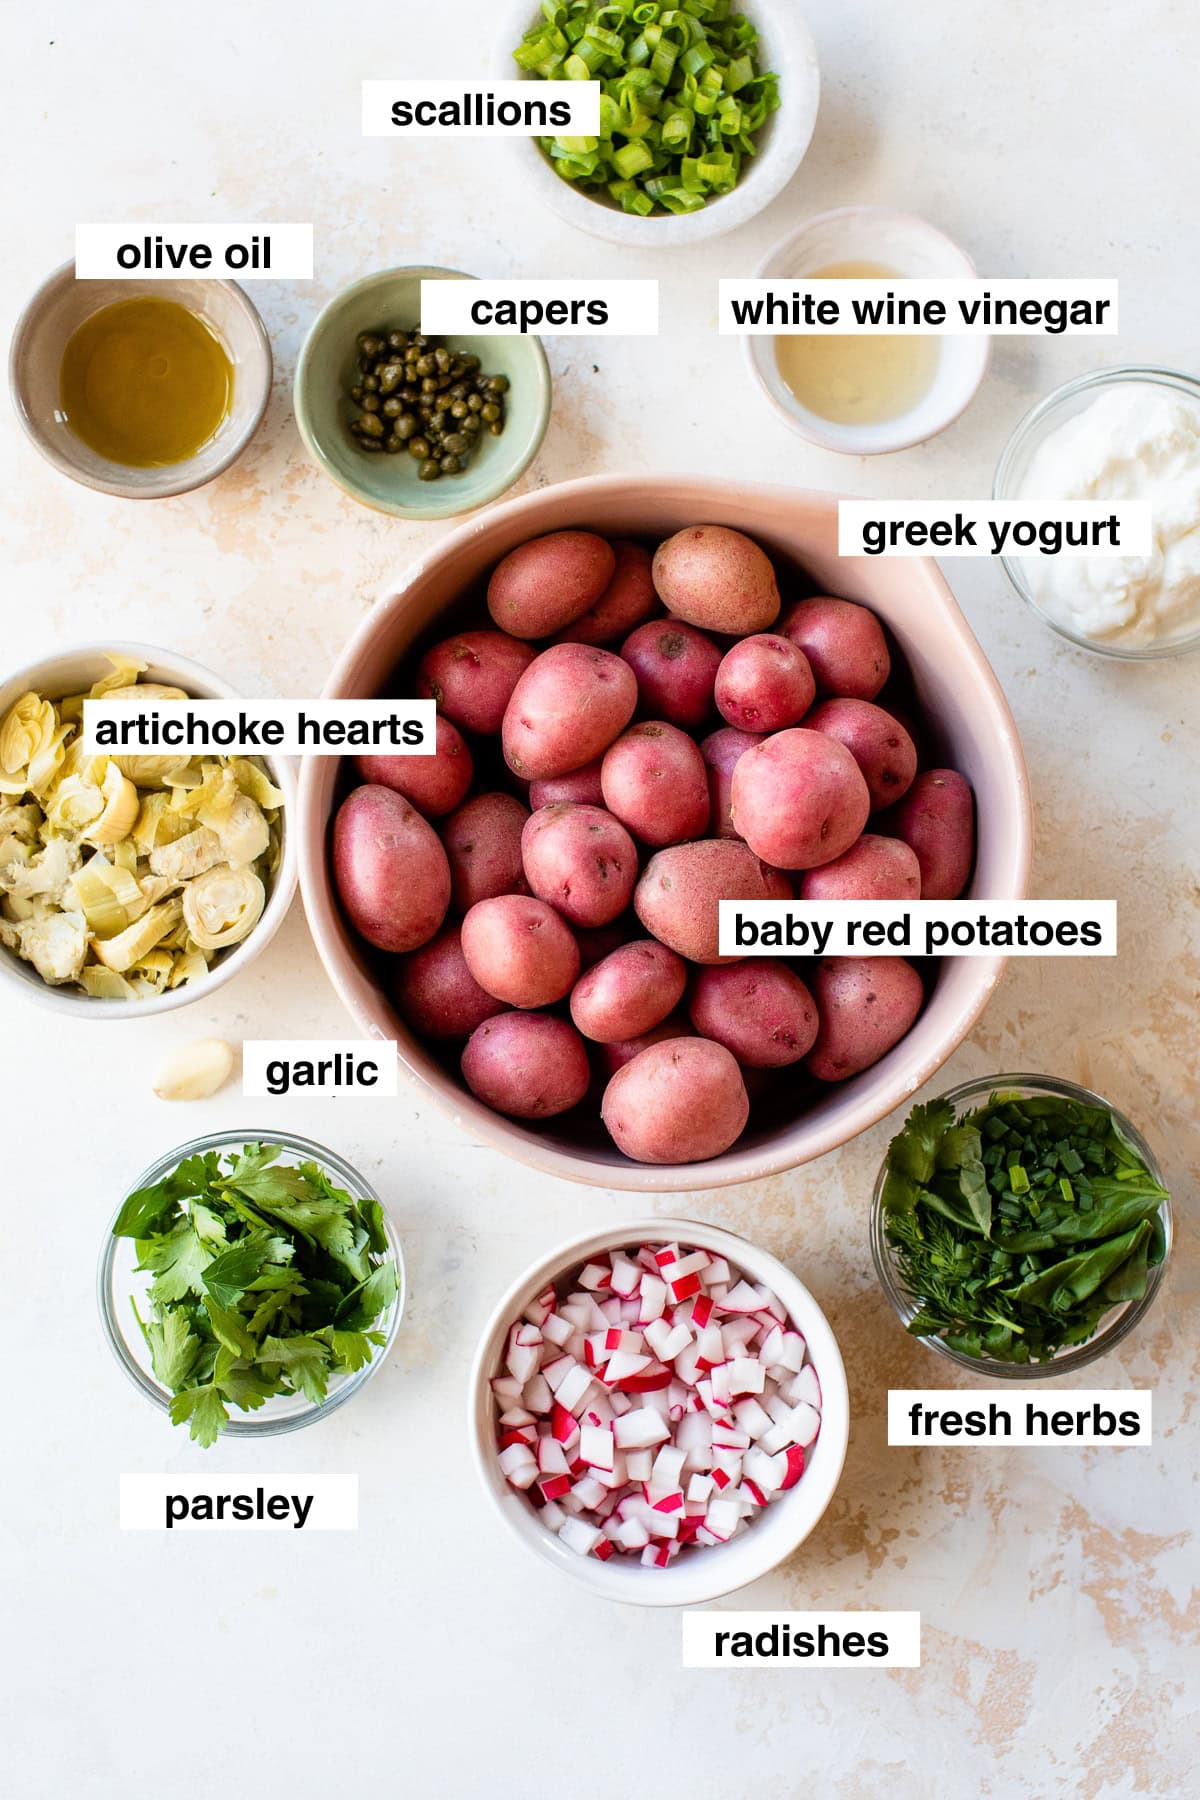 potatoes, herbs, radishes, artichokes